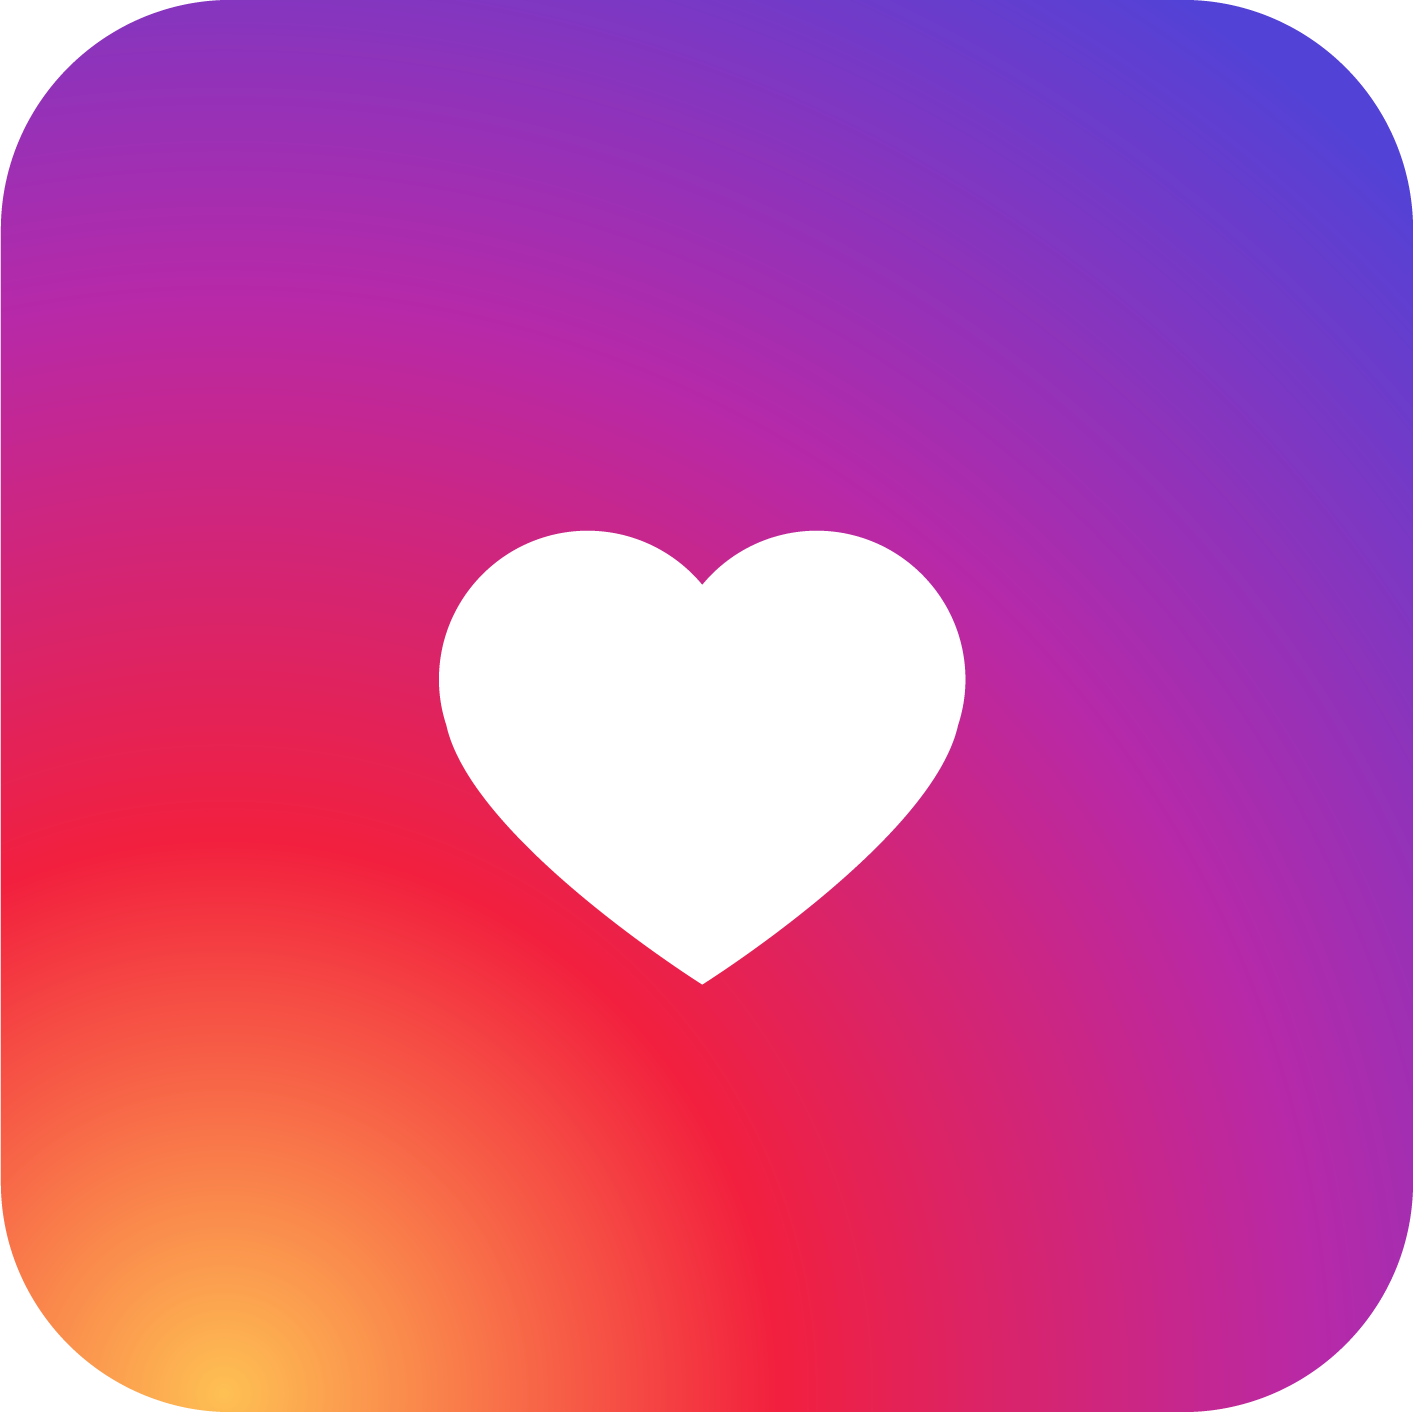 Heart Clip art - instagram png download - 1413*1412 - Free Transparent ...